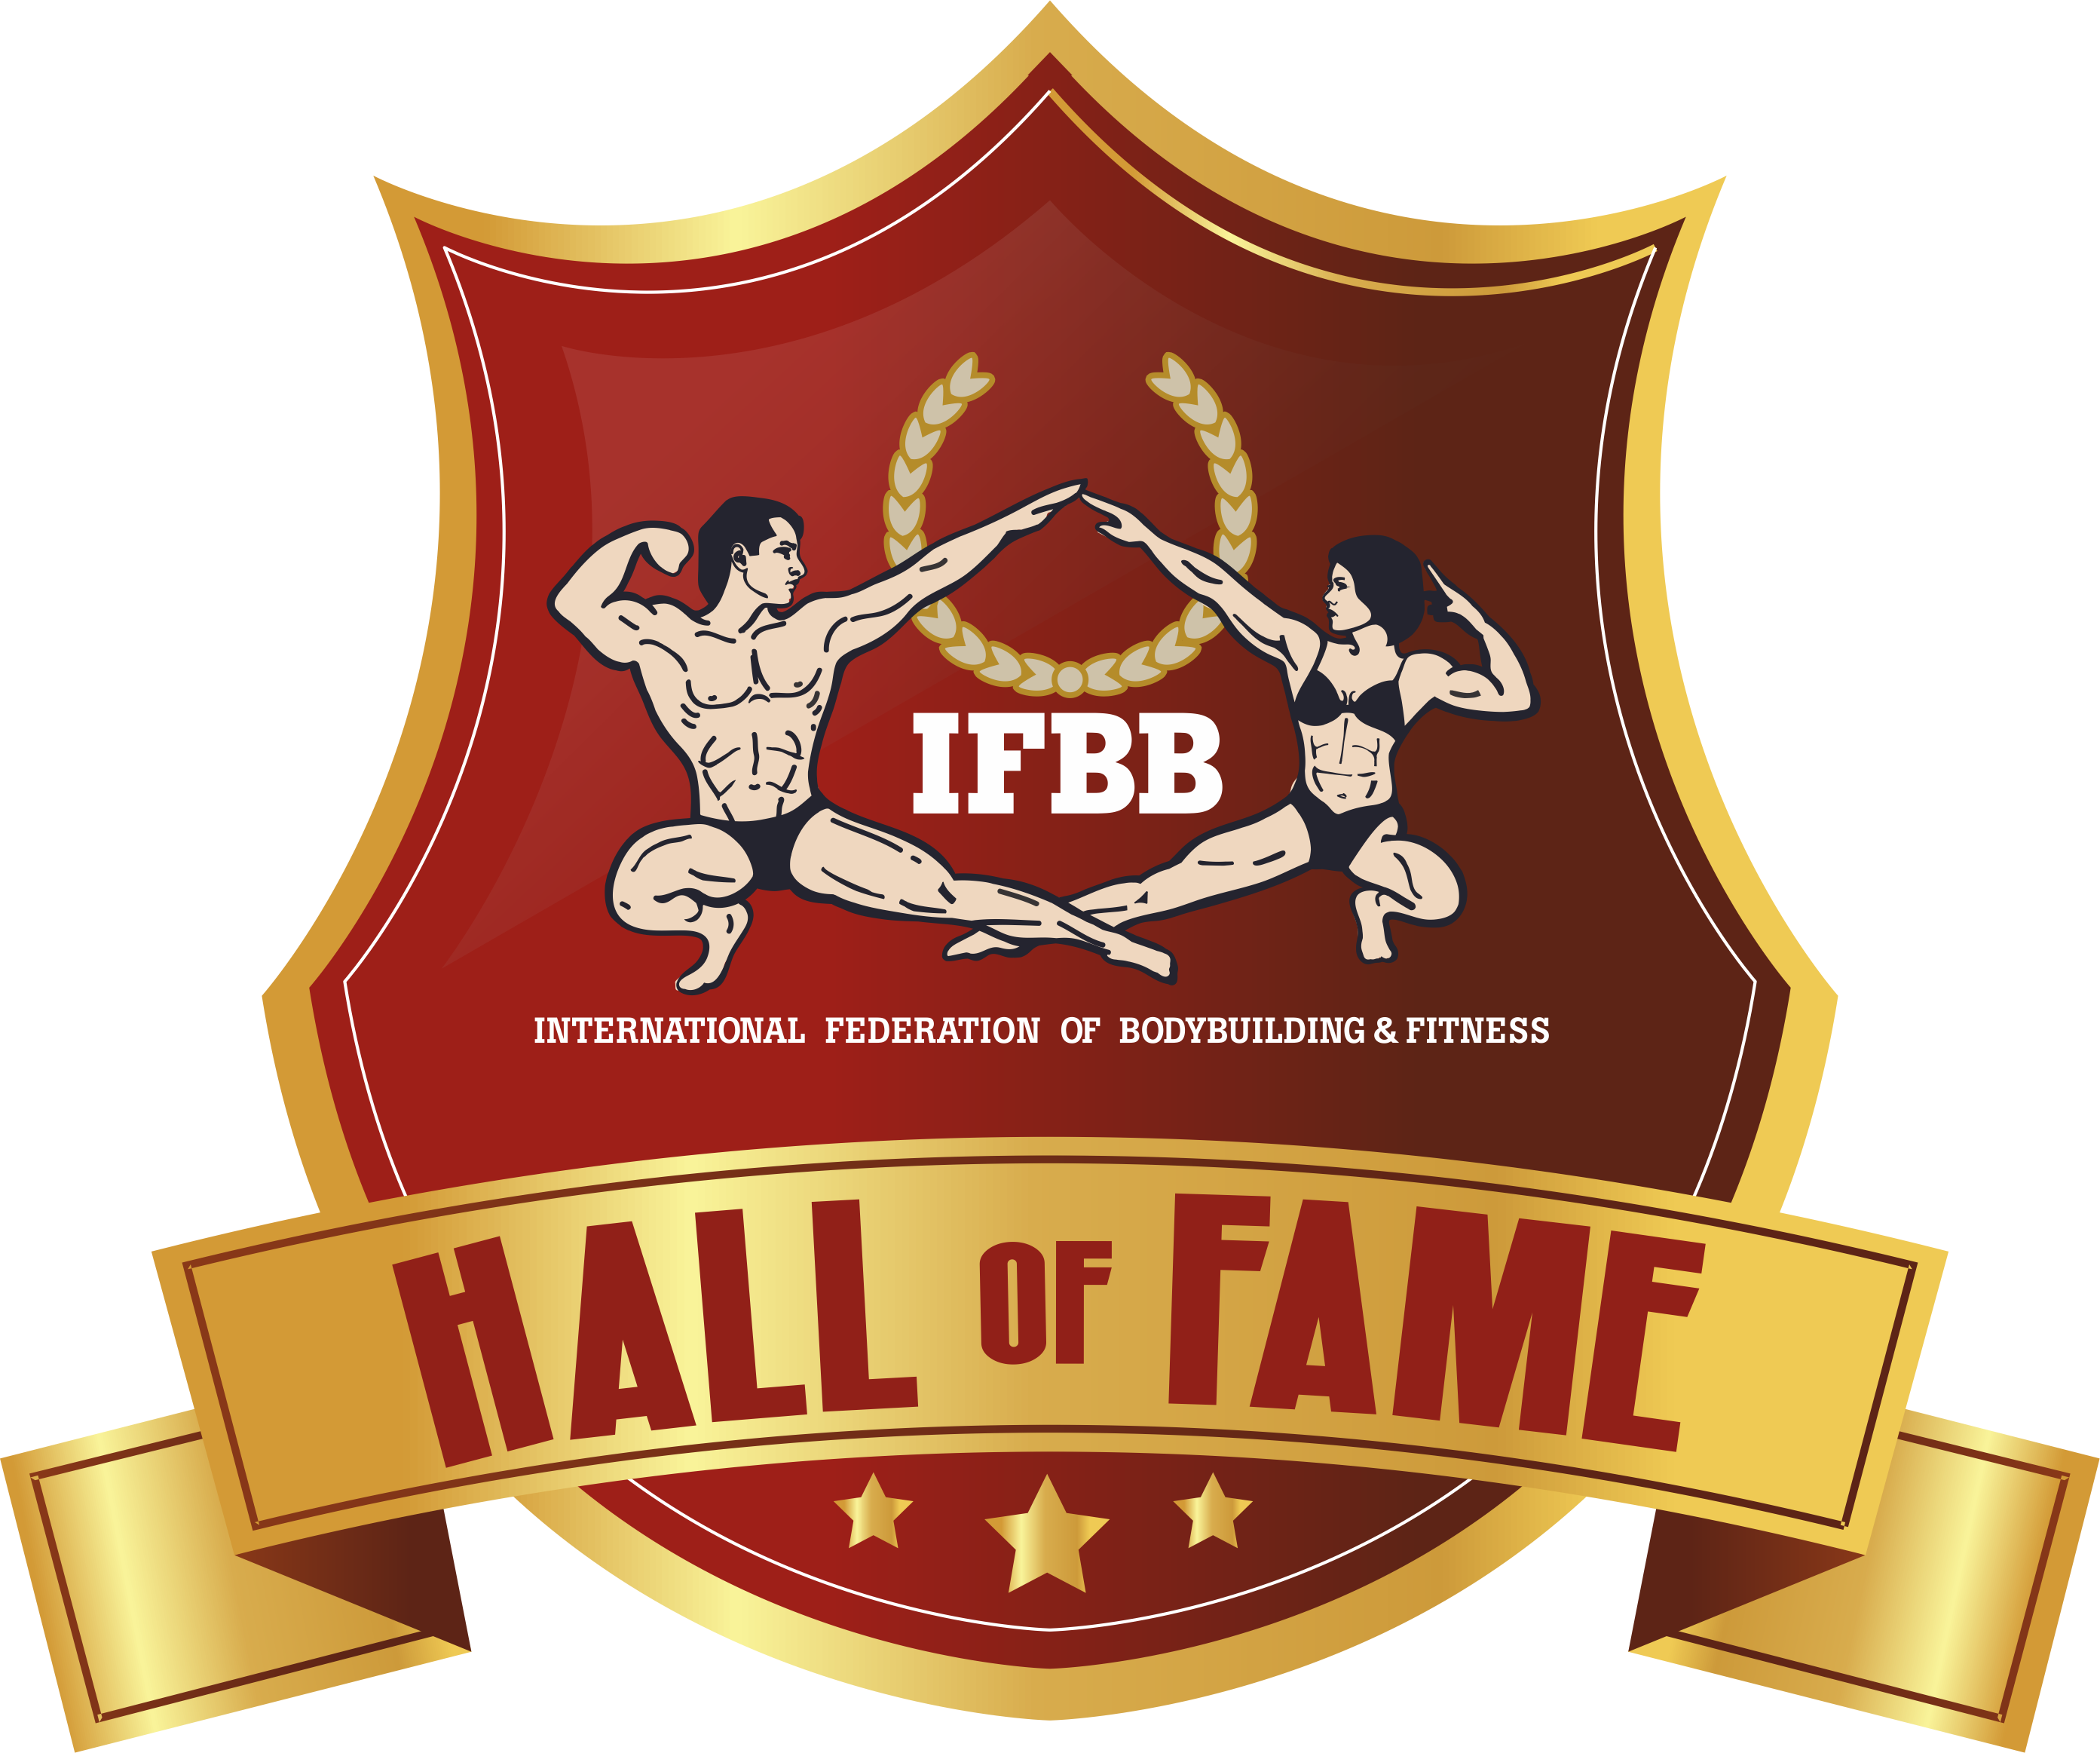 Hall of Fame PNG Image File